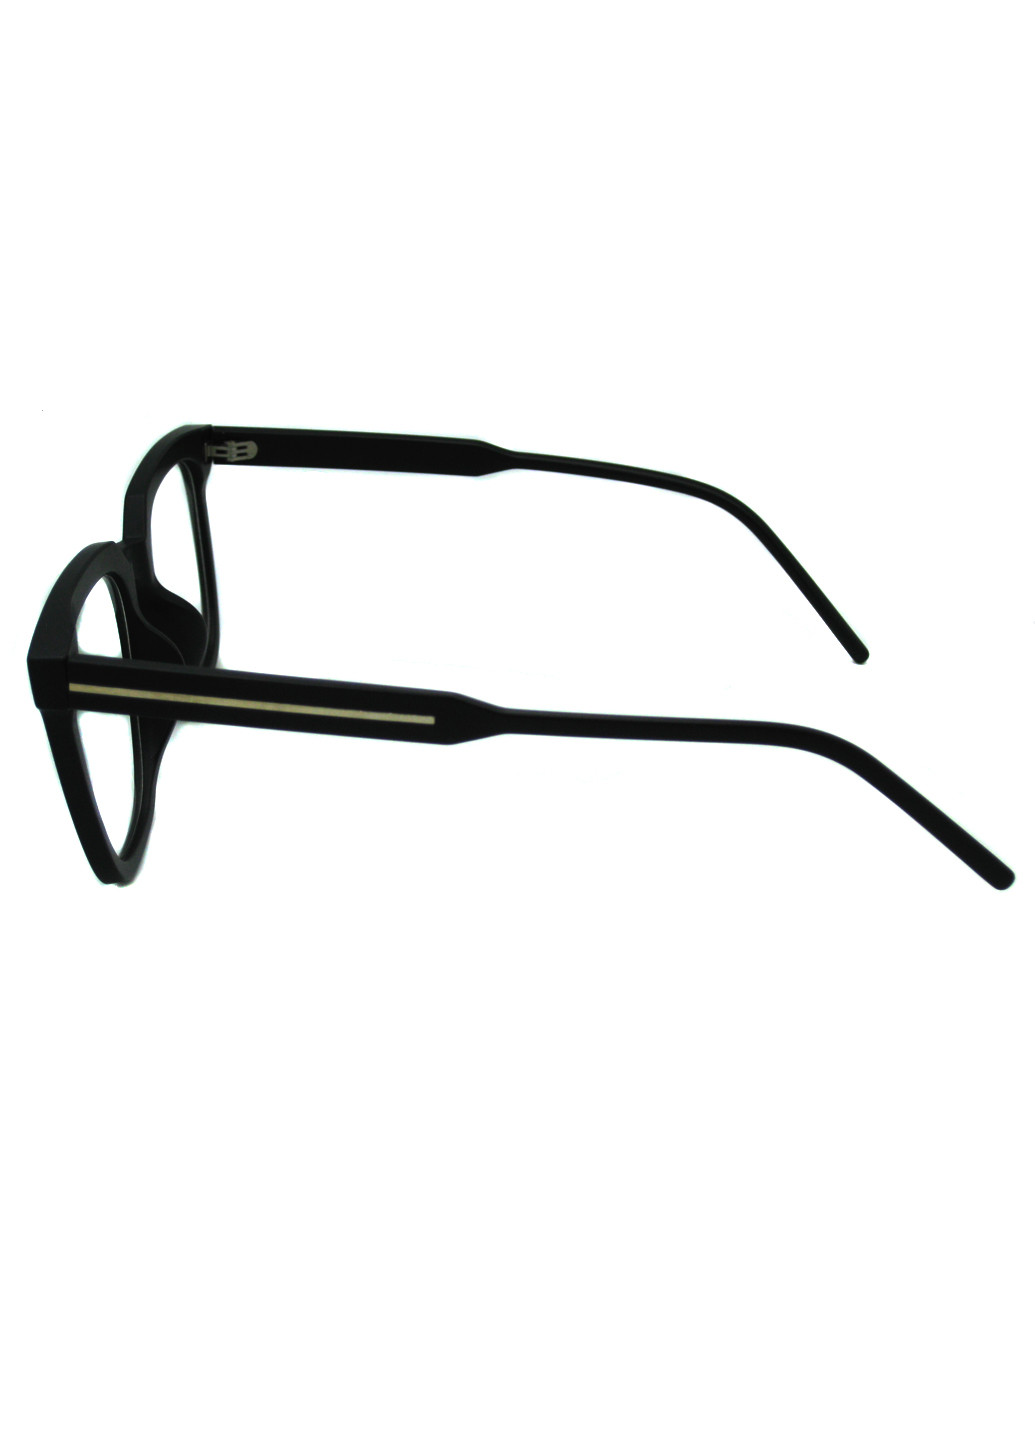 Имиджевые очки Imagstyle 823 02 (265091071)